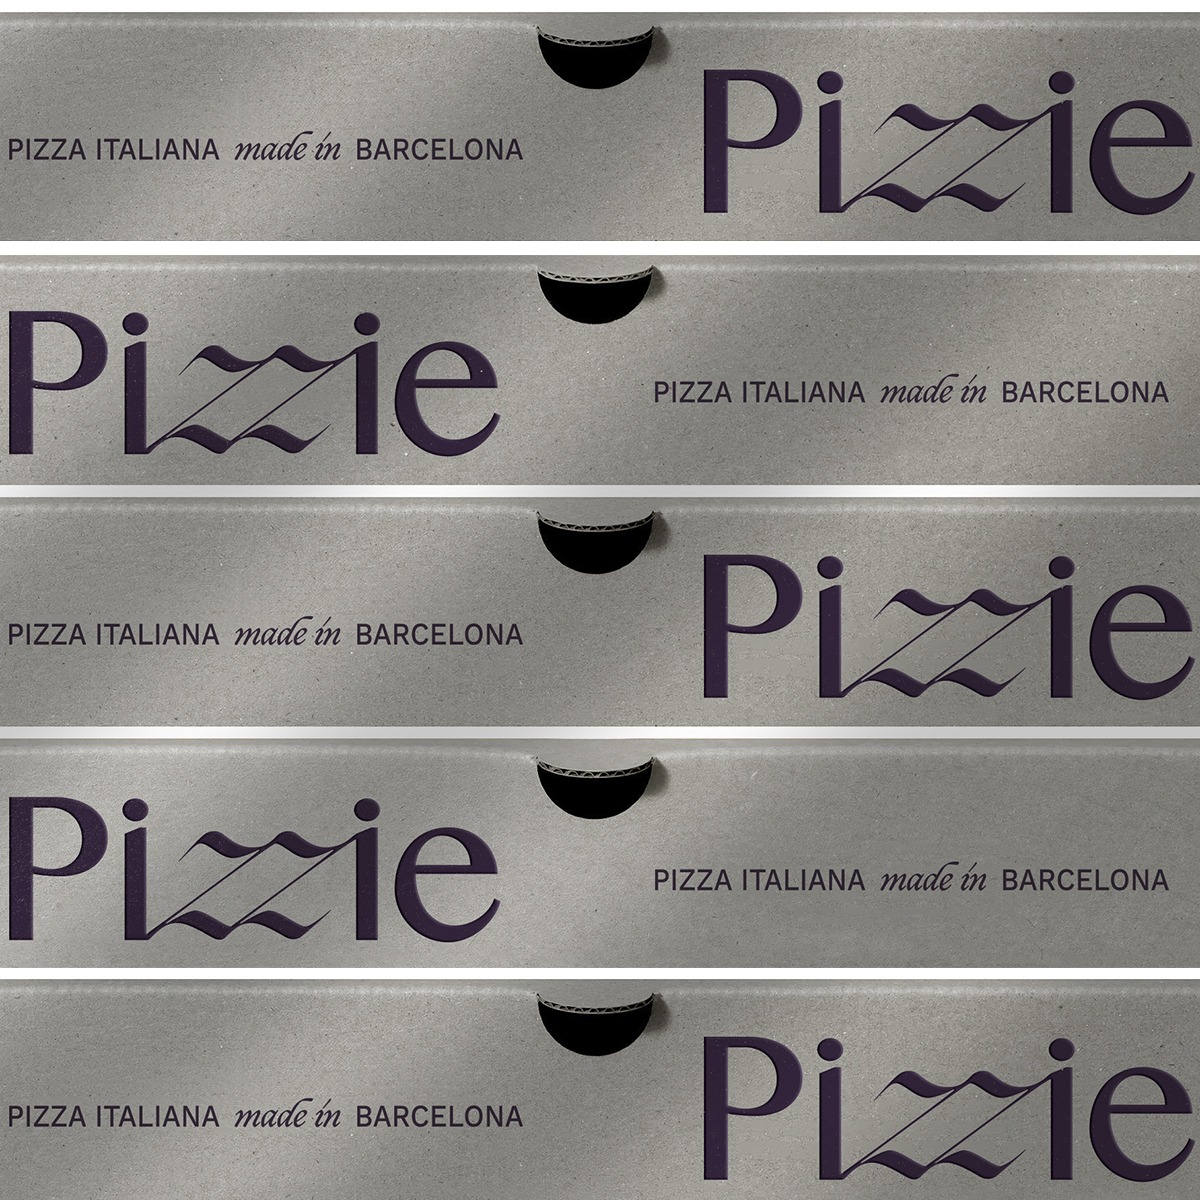 Pizzie比萨餐厅品牌视觉设计